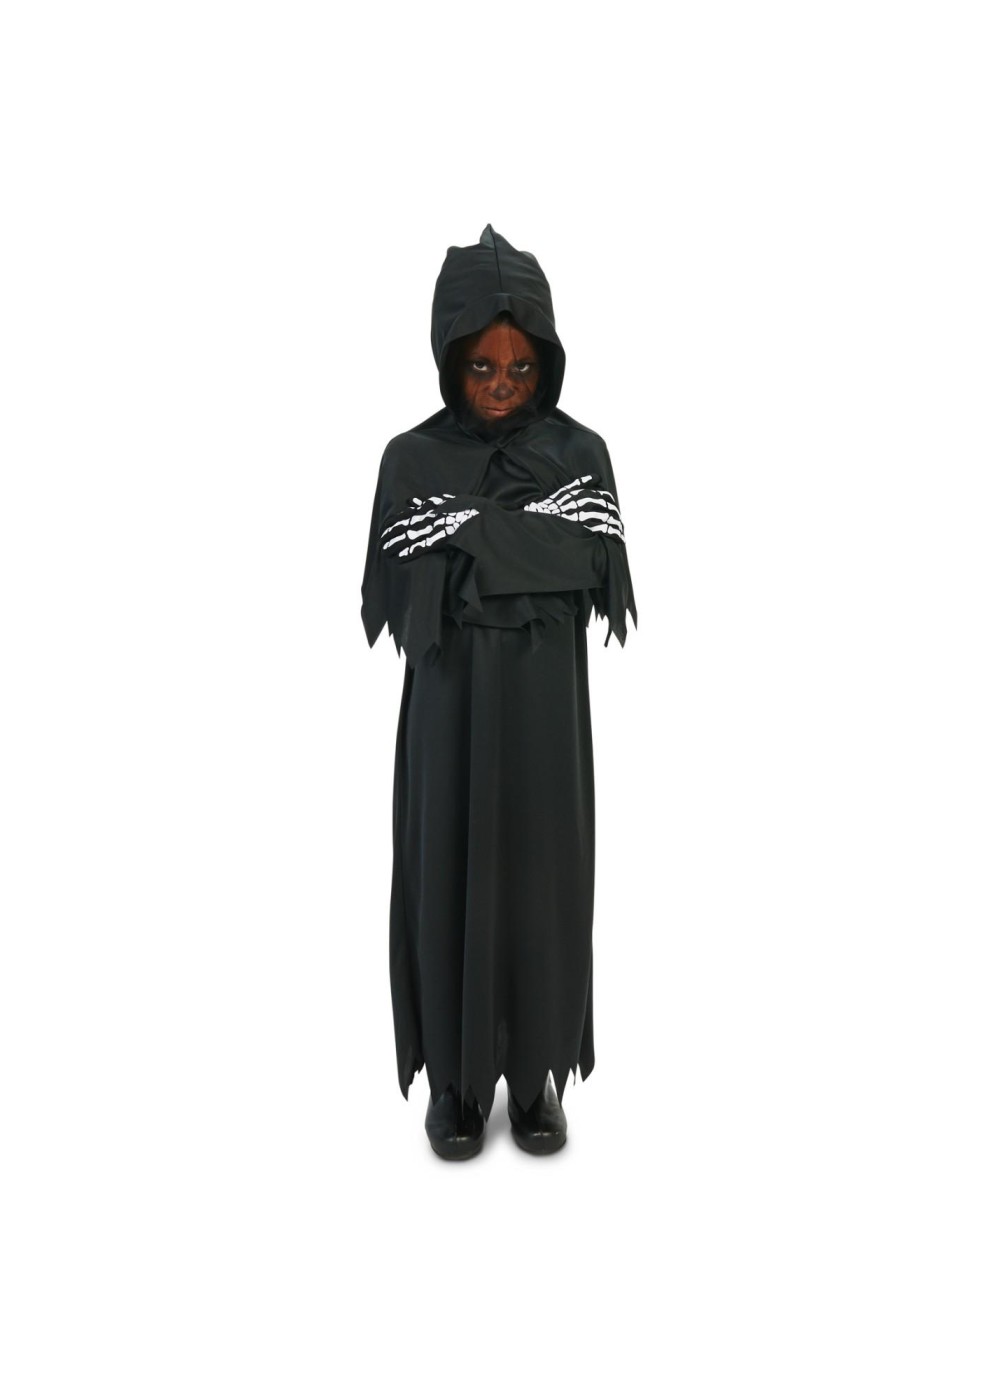 Black Hooded Grim Reaper Boys Costume